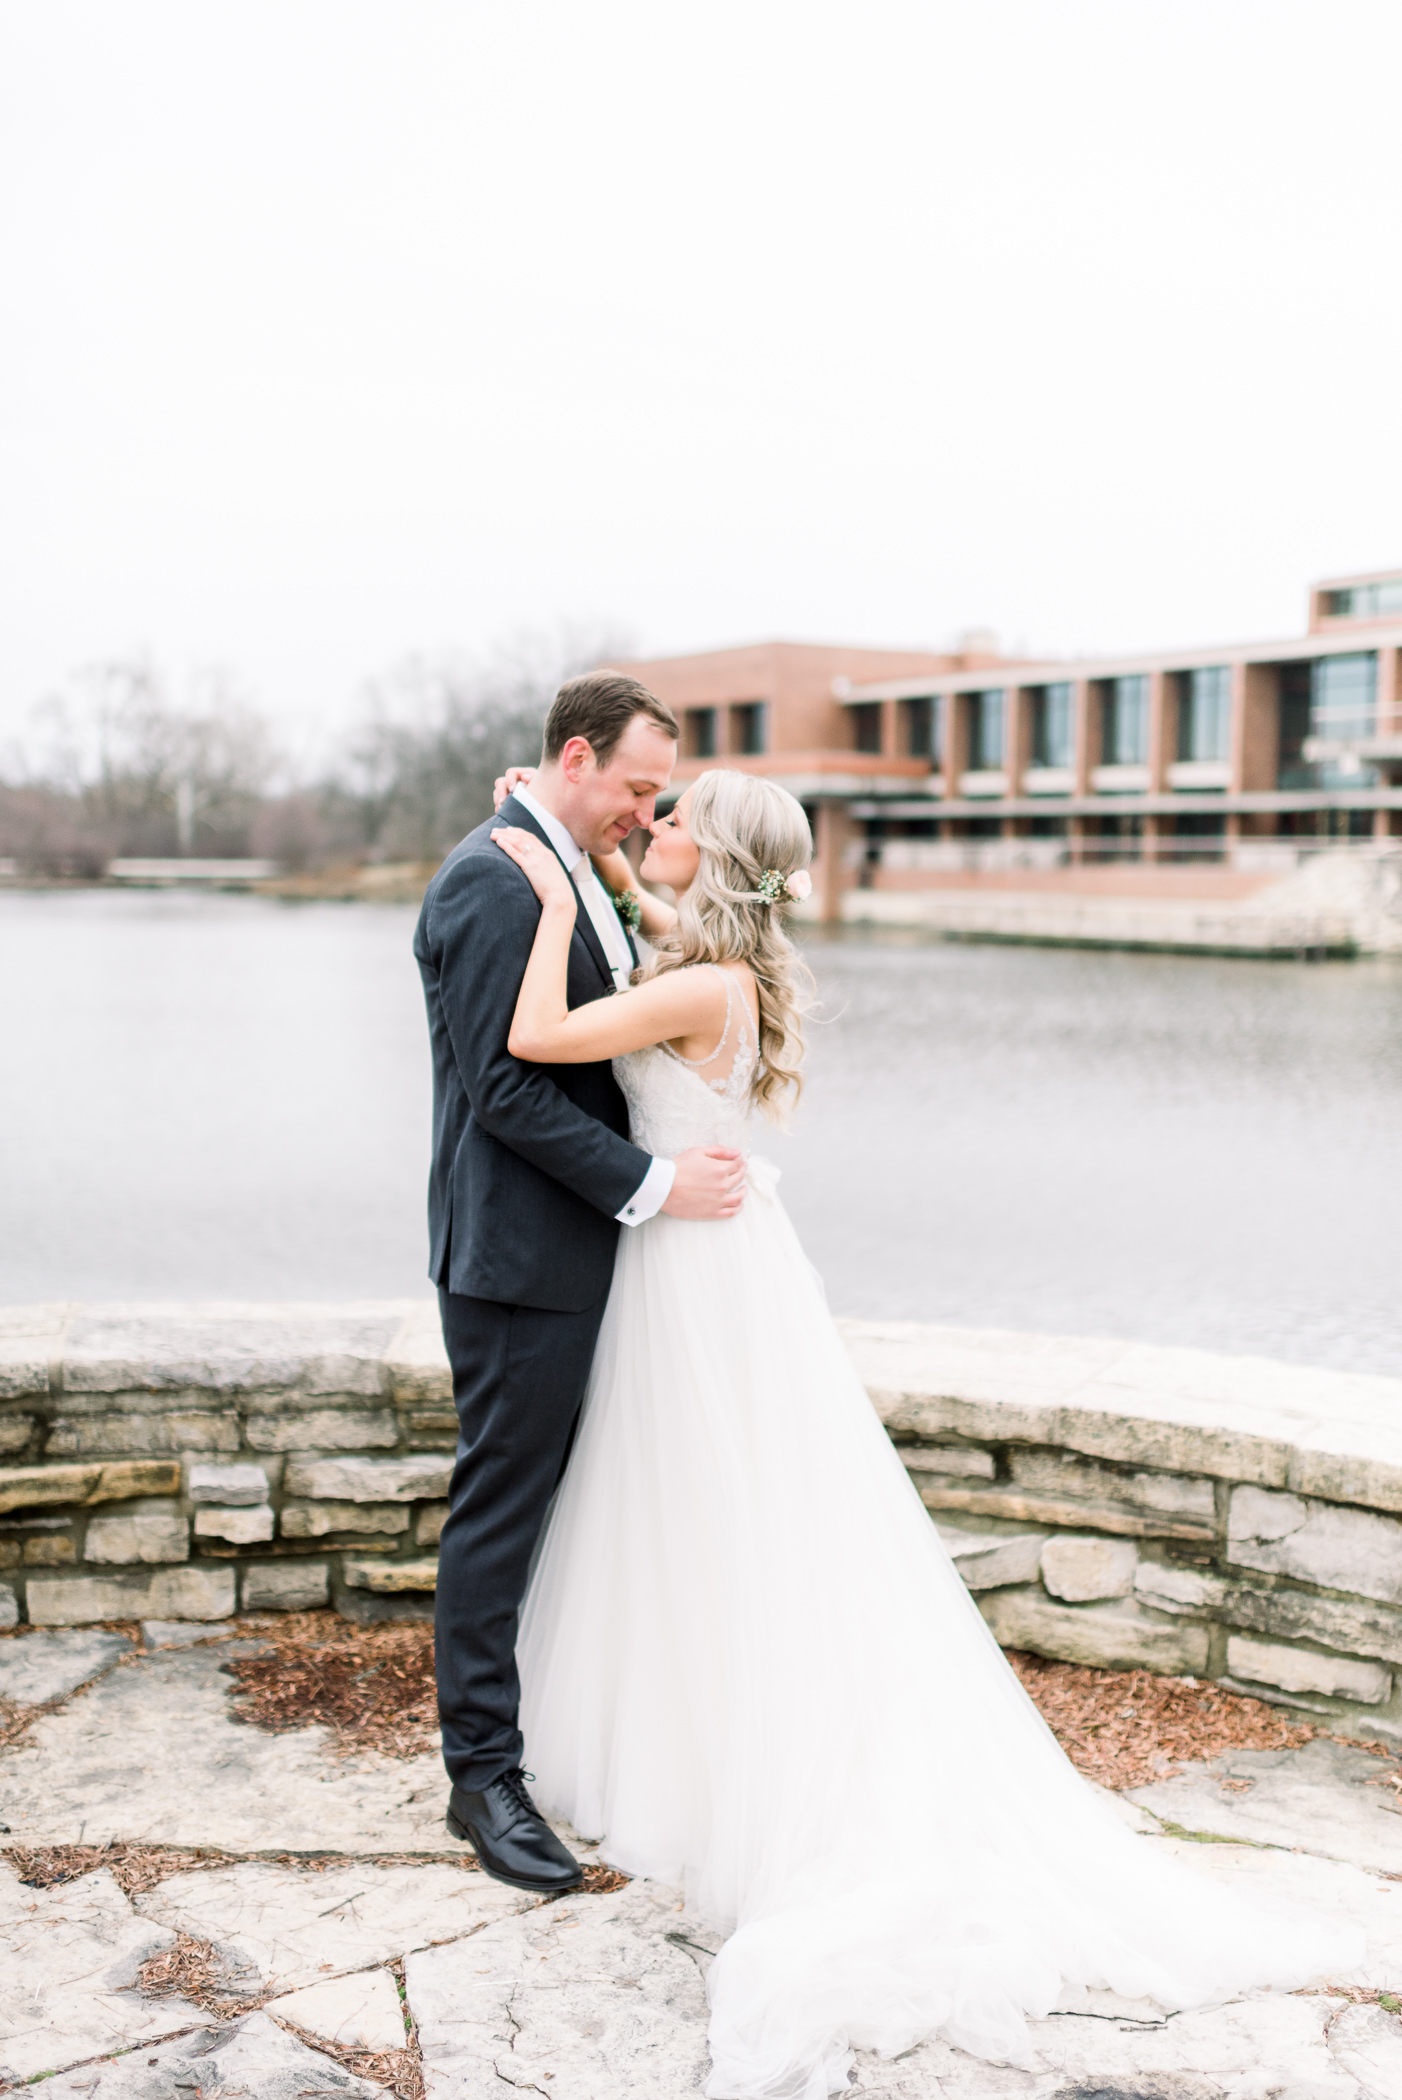 Hyatt Lodge Wedding Photographers - Larissa Marie Photography